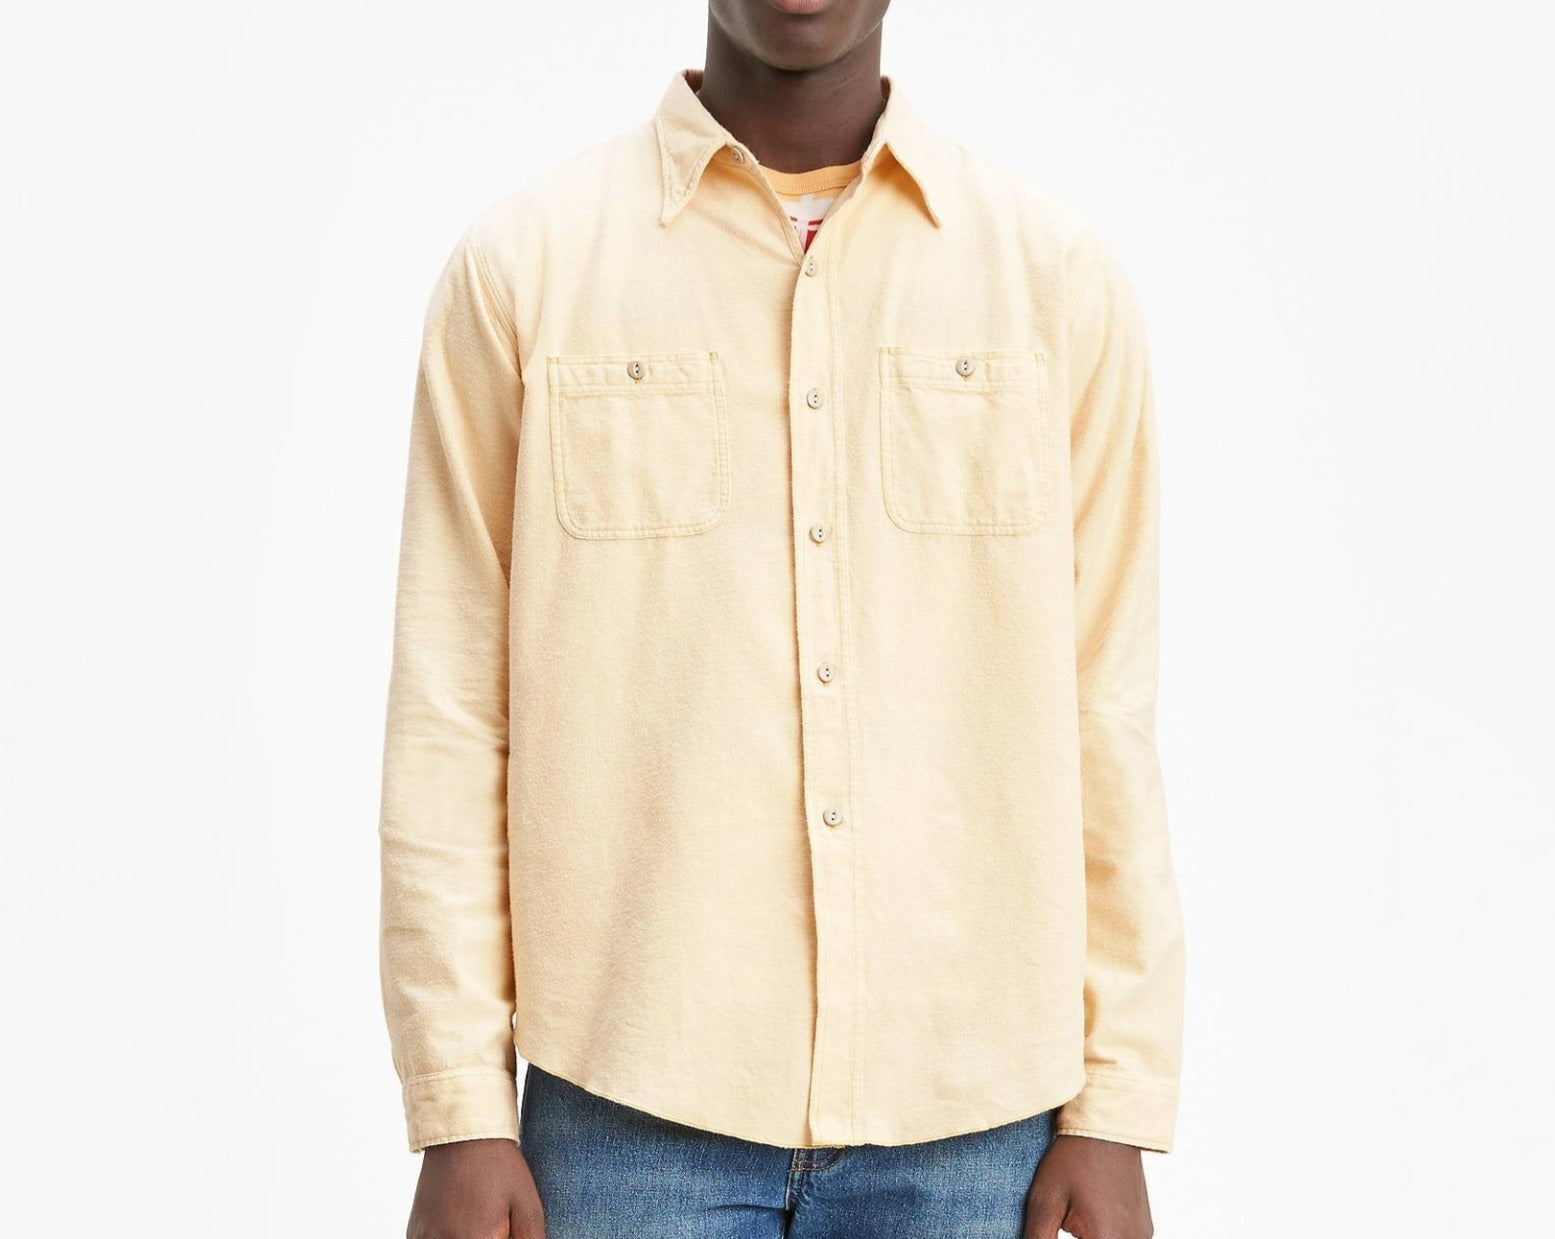 LEVI'S® VINTAGE CLOTHING Deluxe Shirt Cream 599810001 | eBay